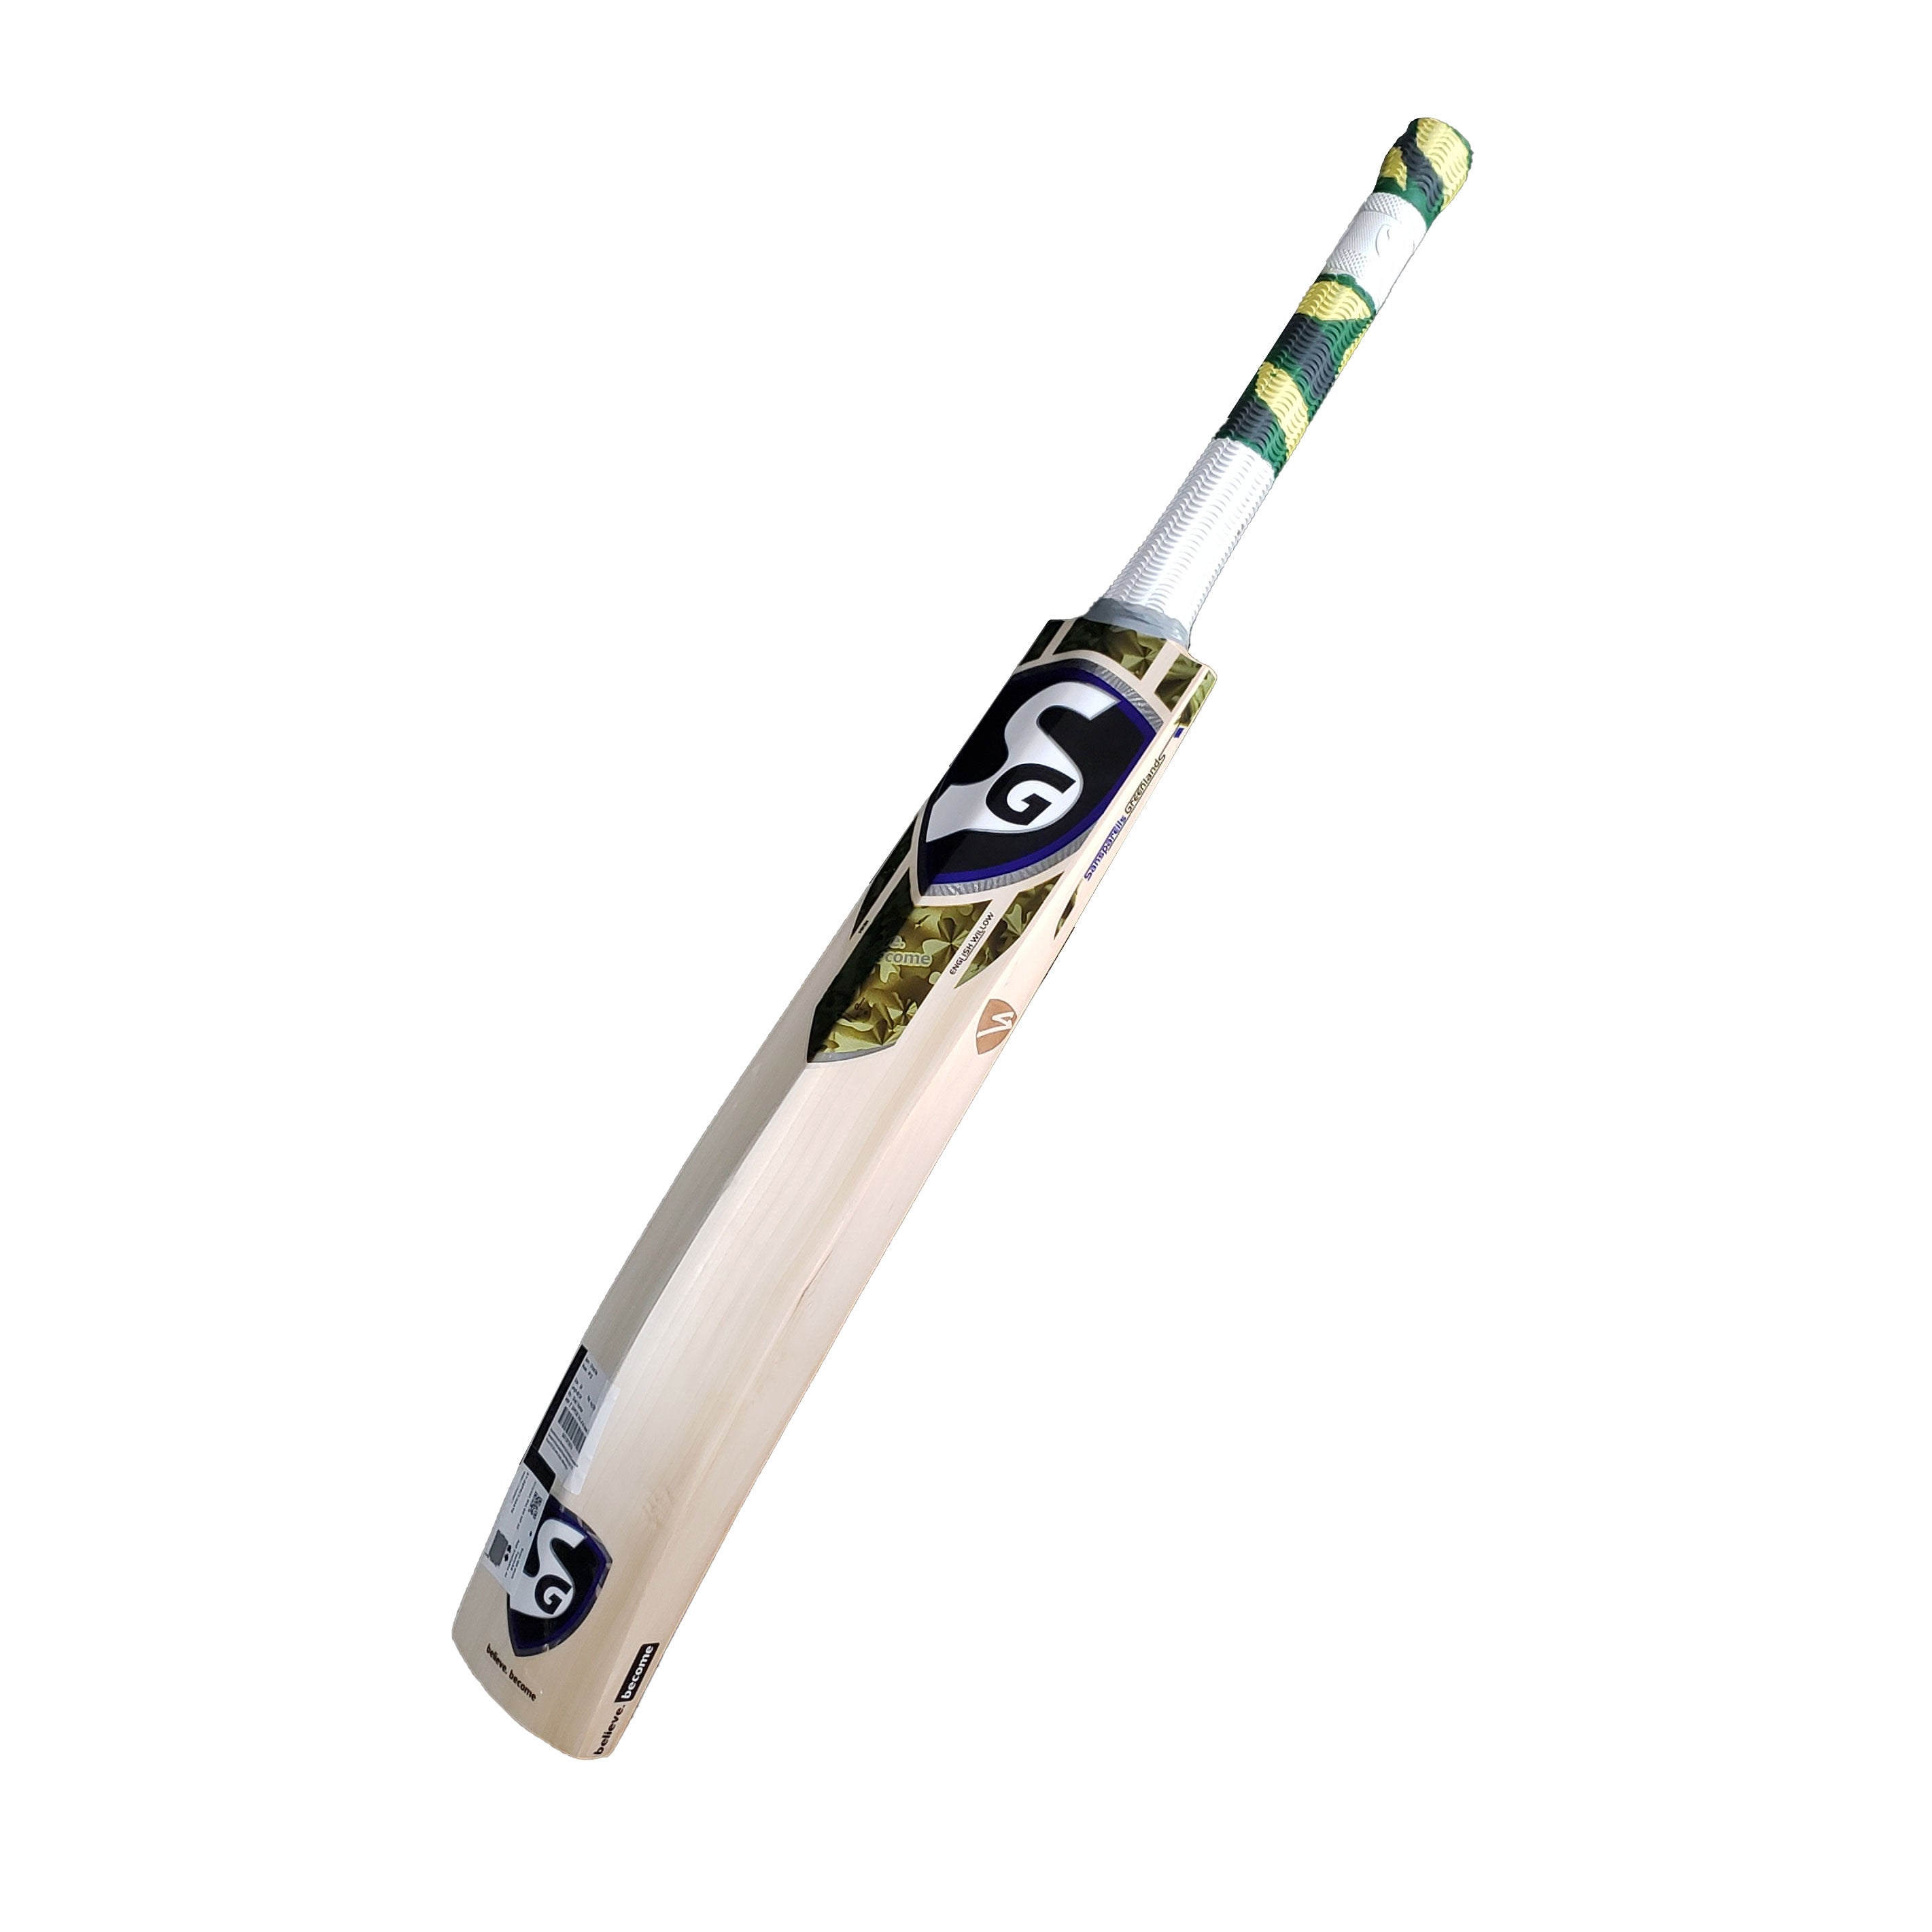 SG HP-33 Cricket Bat | HP-33 Hardik Pandya English Willow Cricket Bat